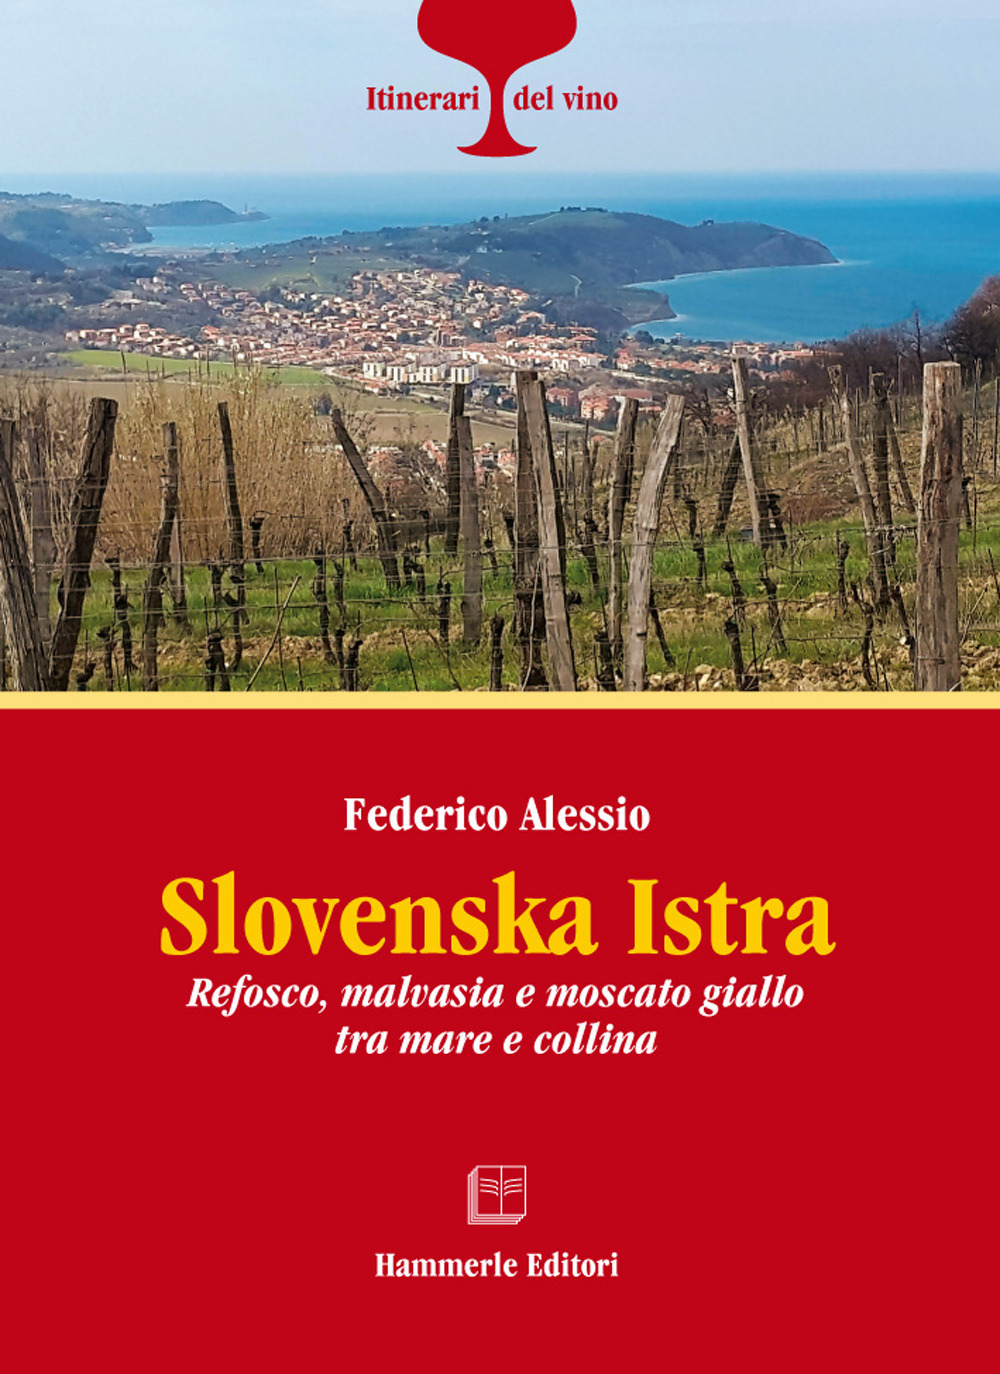 Slovenska Istra. Refosco, malvasia e moscato giallo tra mare e collina